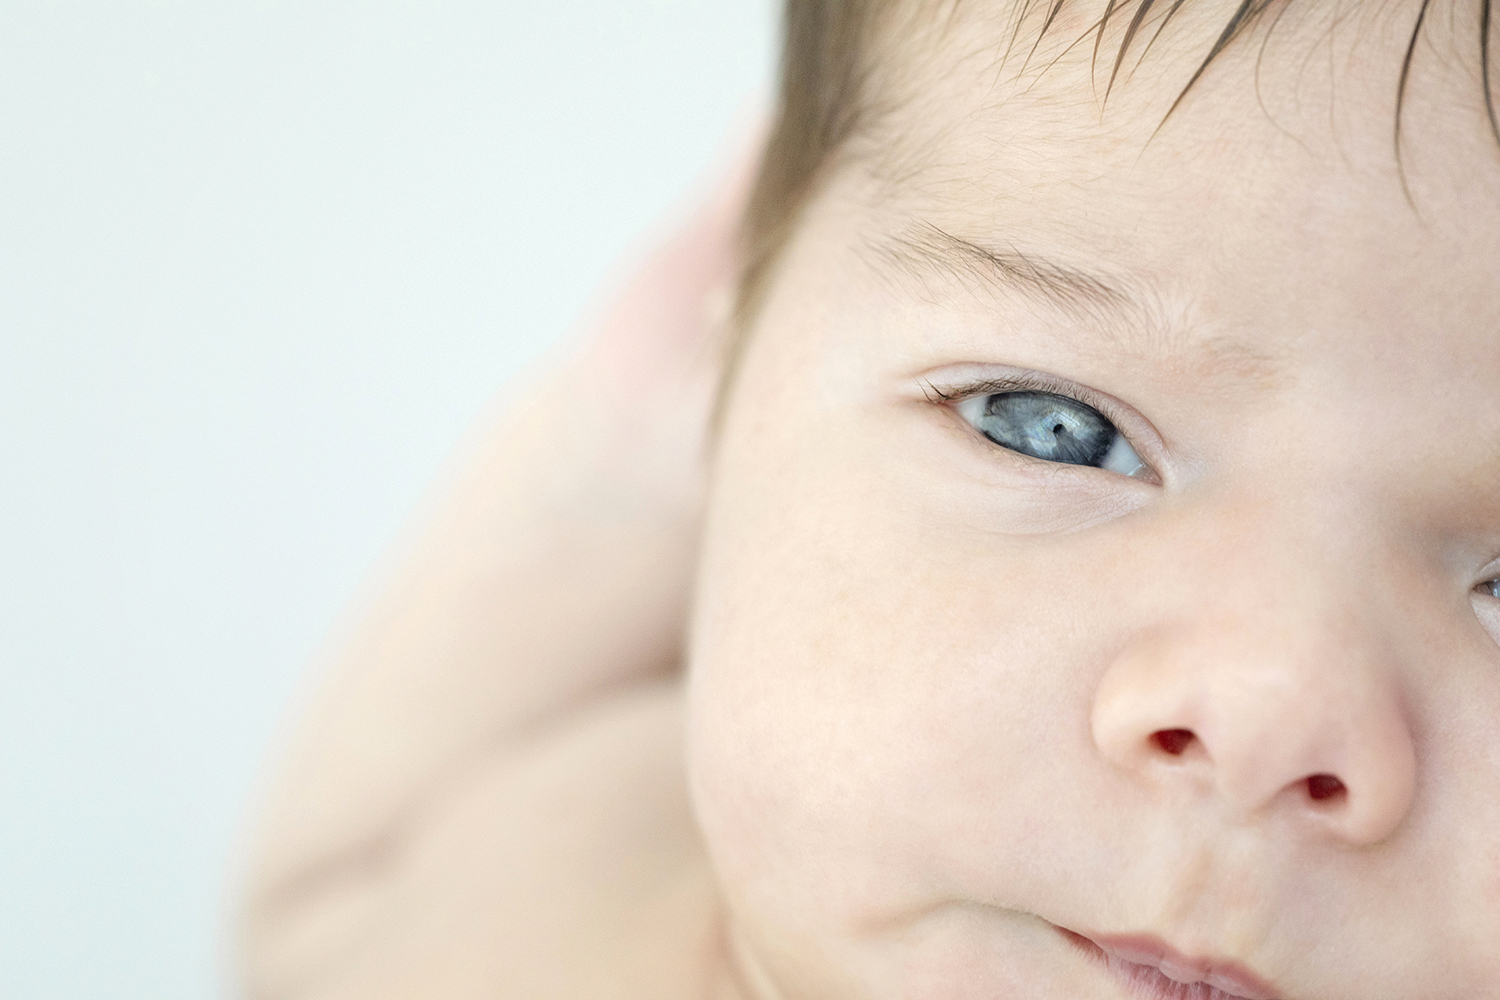 A baby's blue eye.